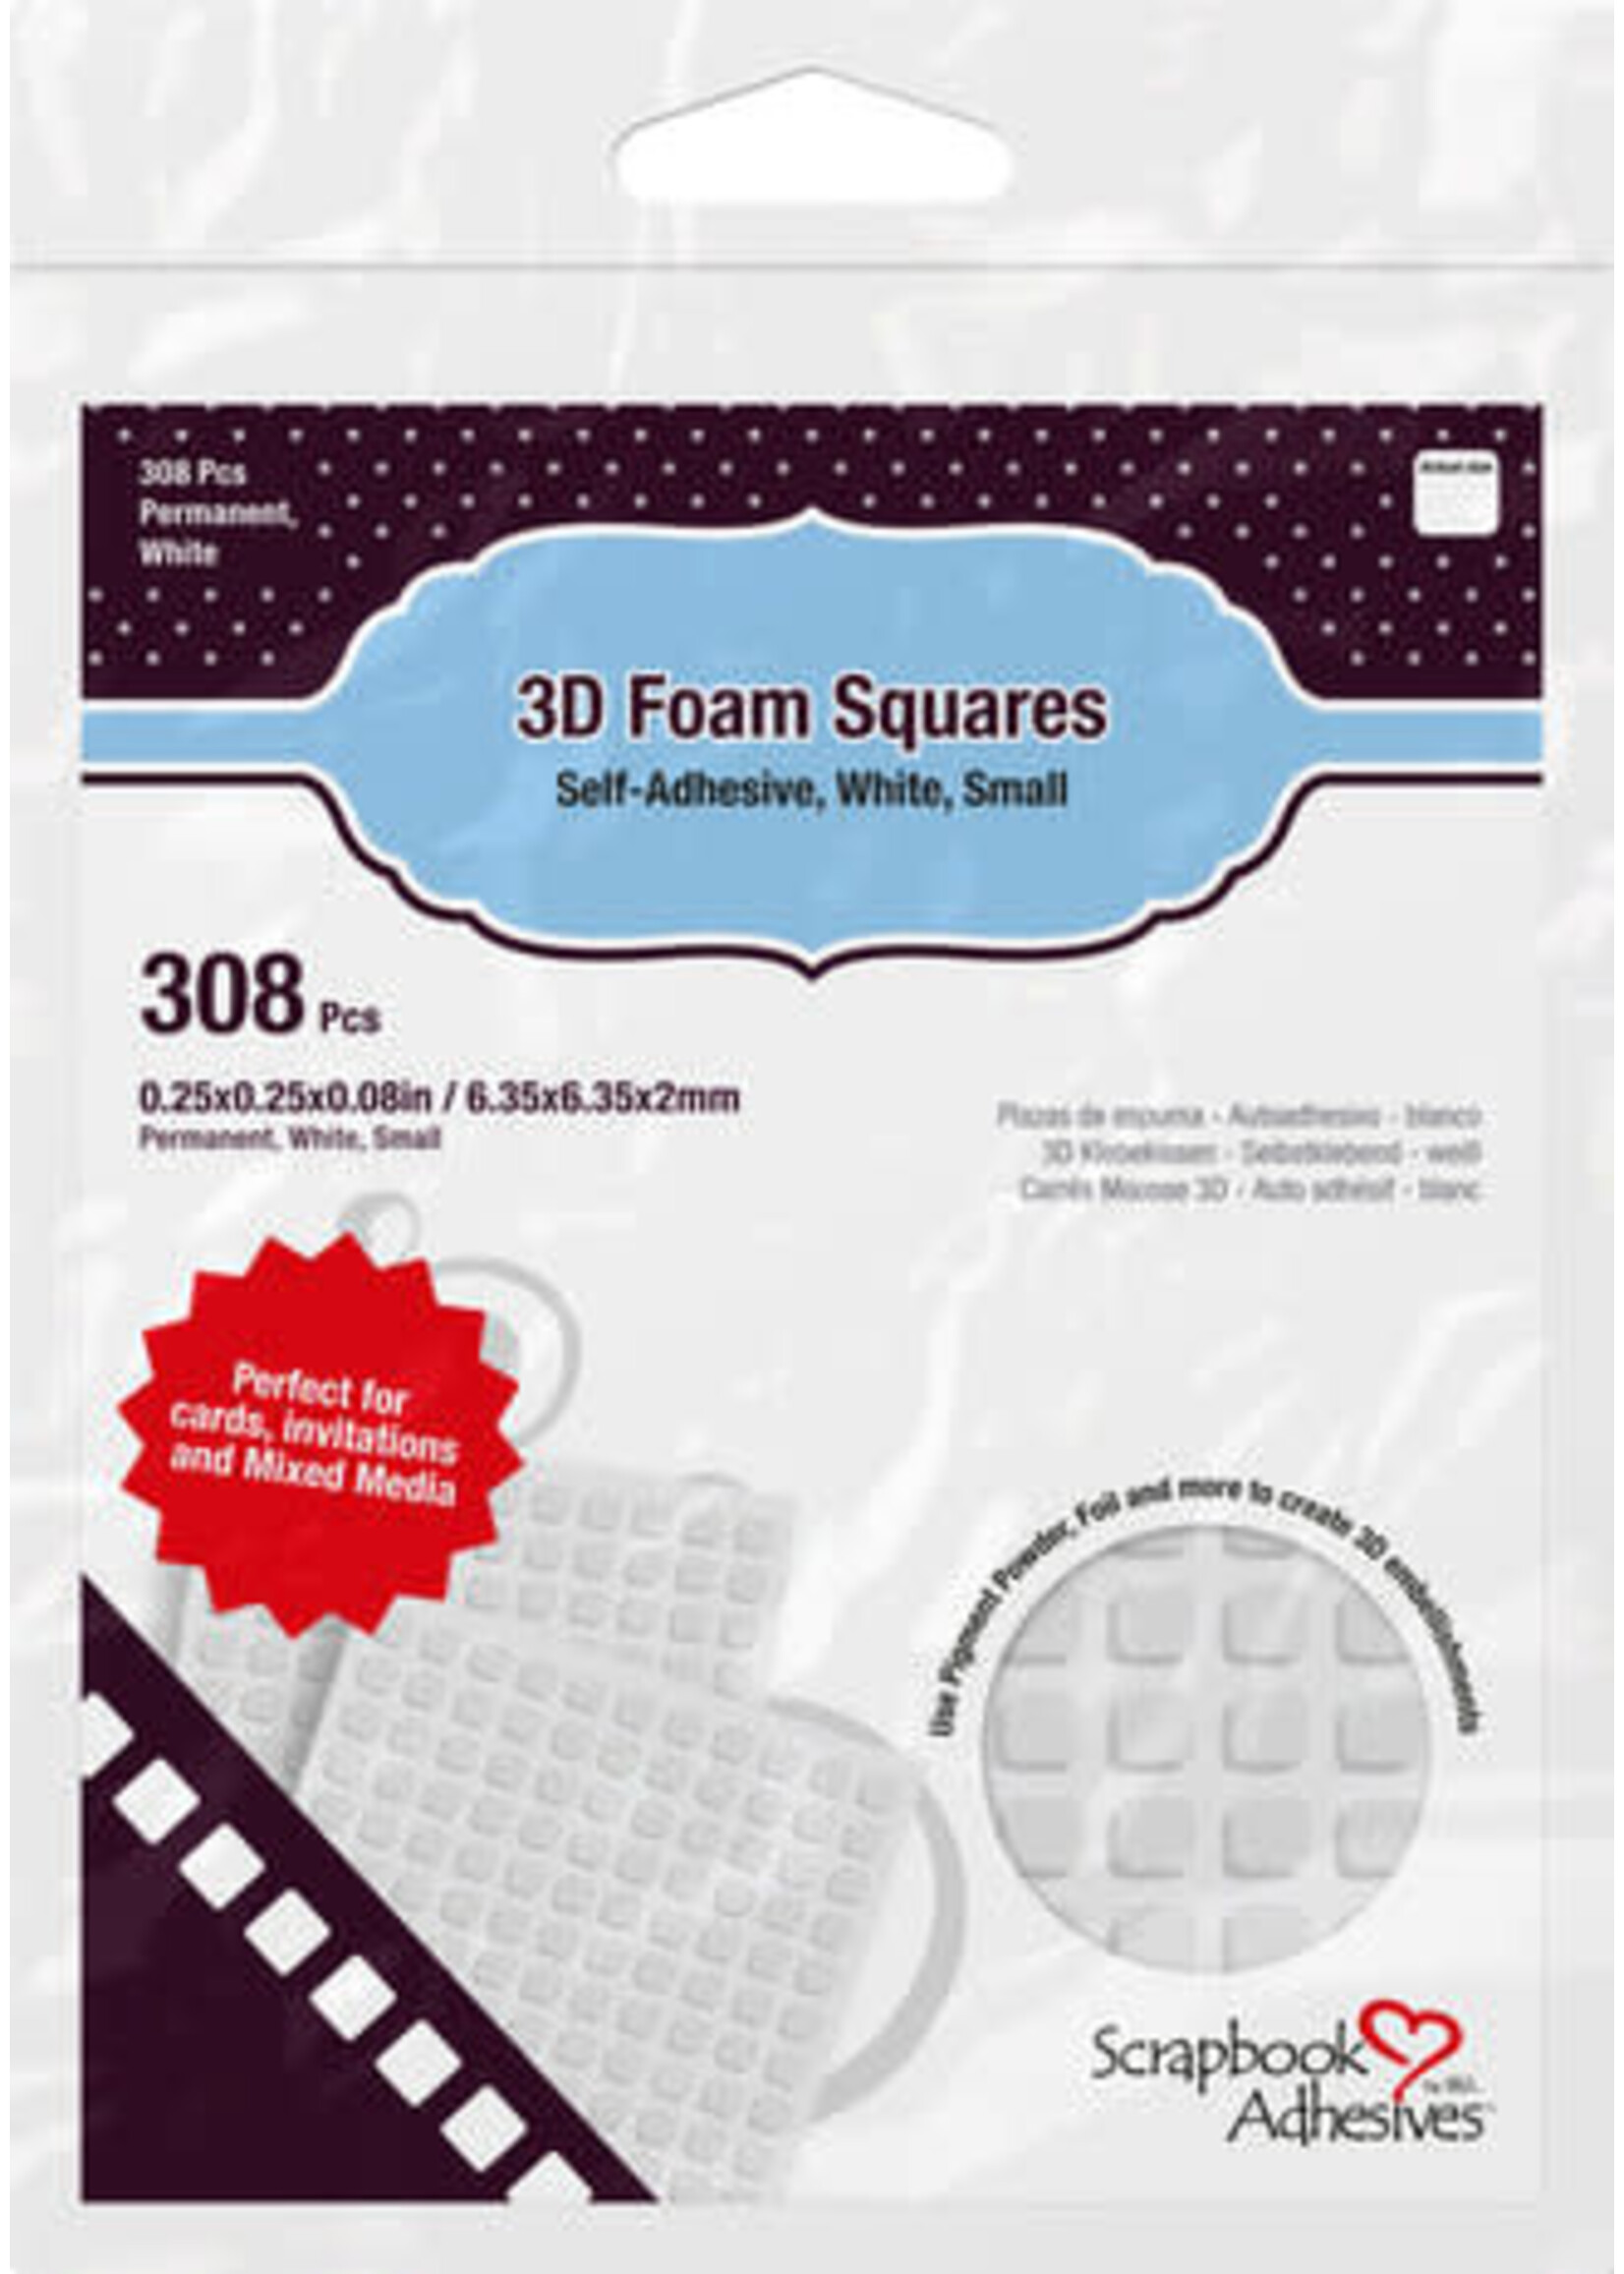 Scrapbook Adhesives 3D Foam Squares White Small (308pcs) (01612)